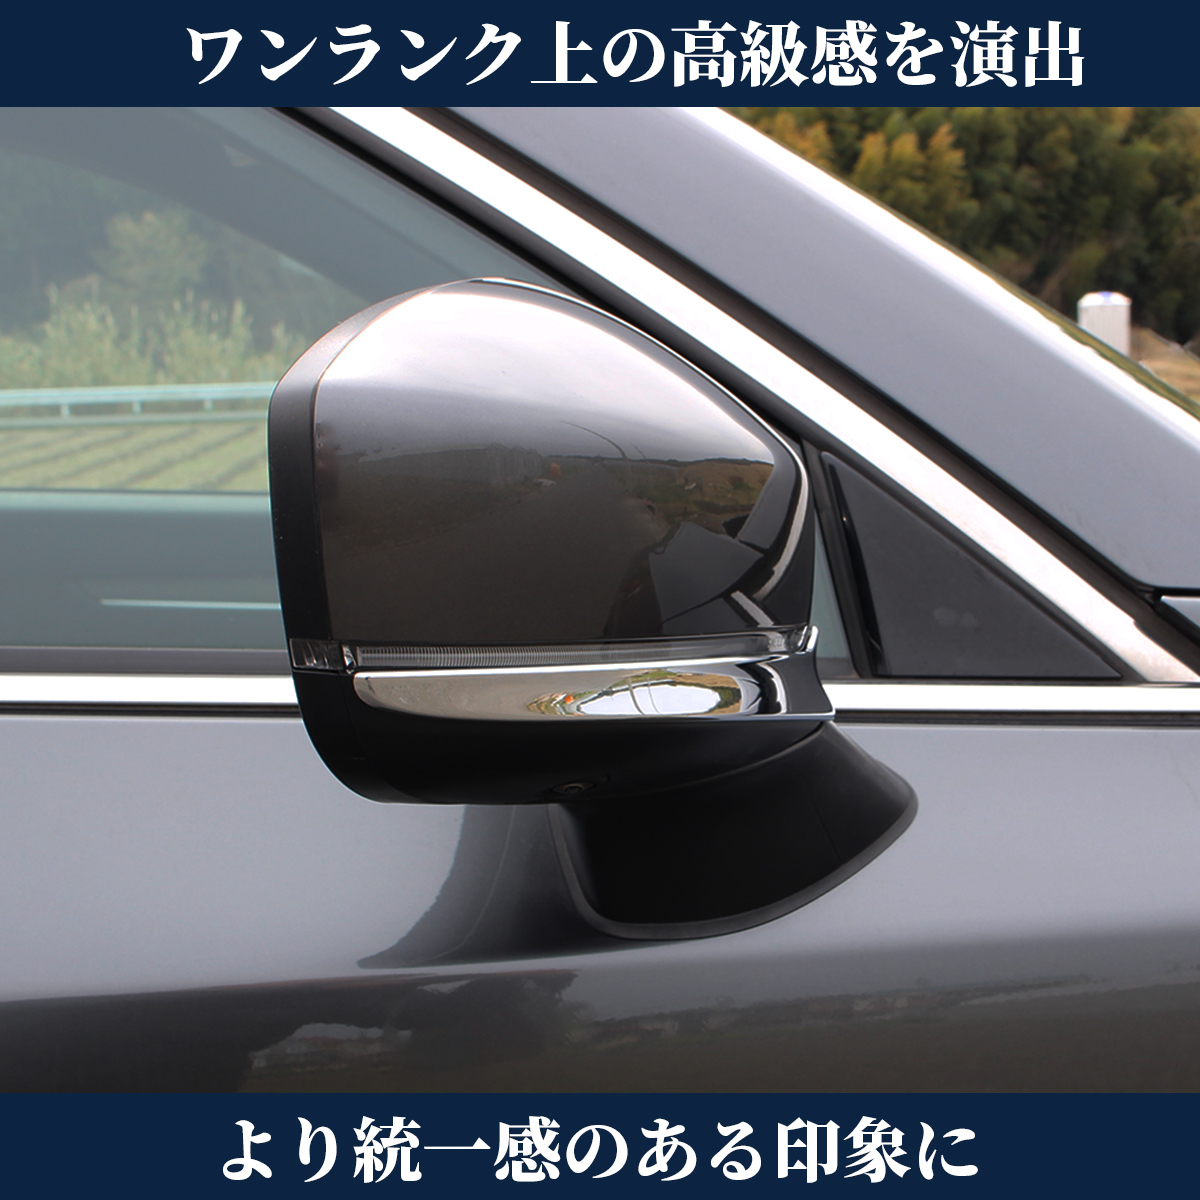 MAZDA マツダ CX-8 アクセサリ サイドミラー カバー トリム 鏡面